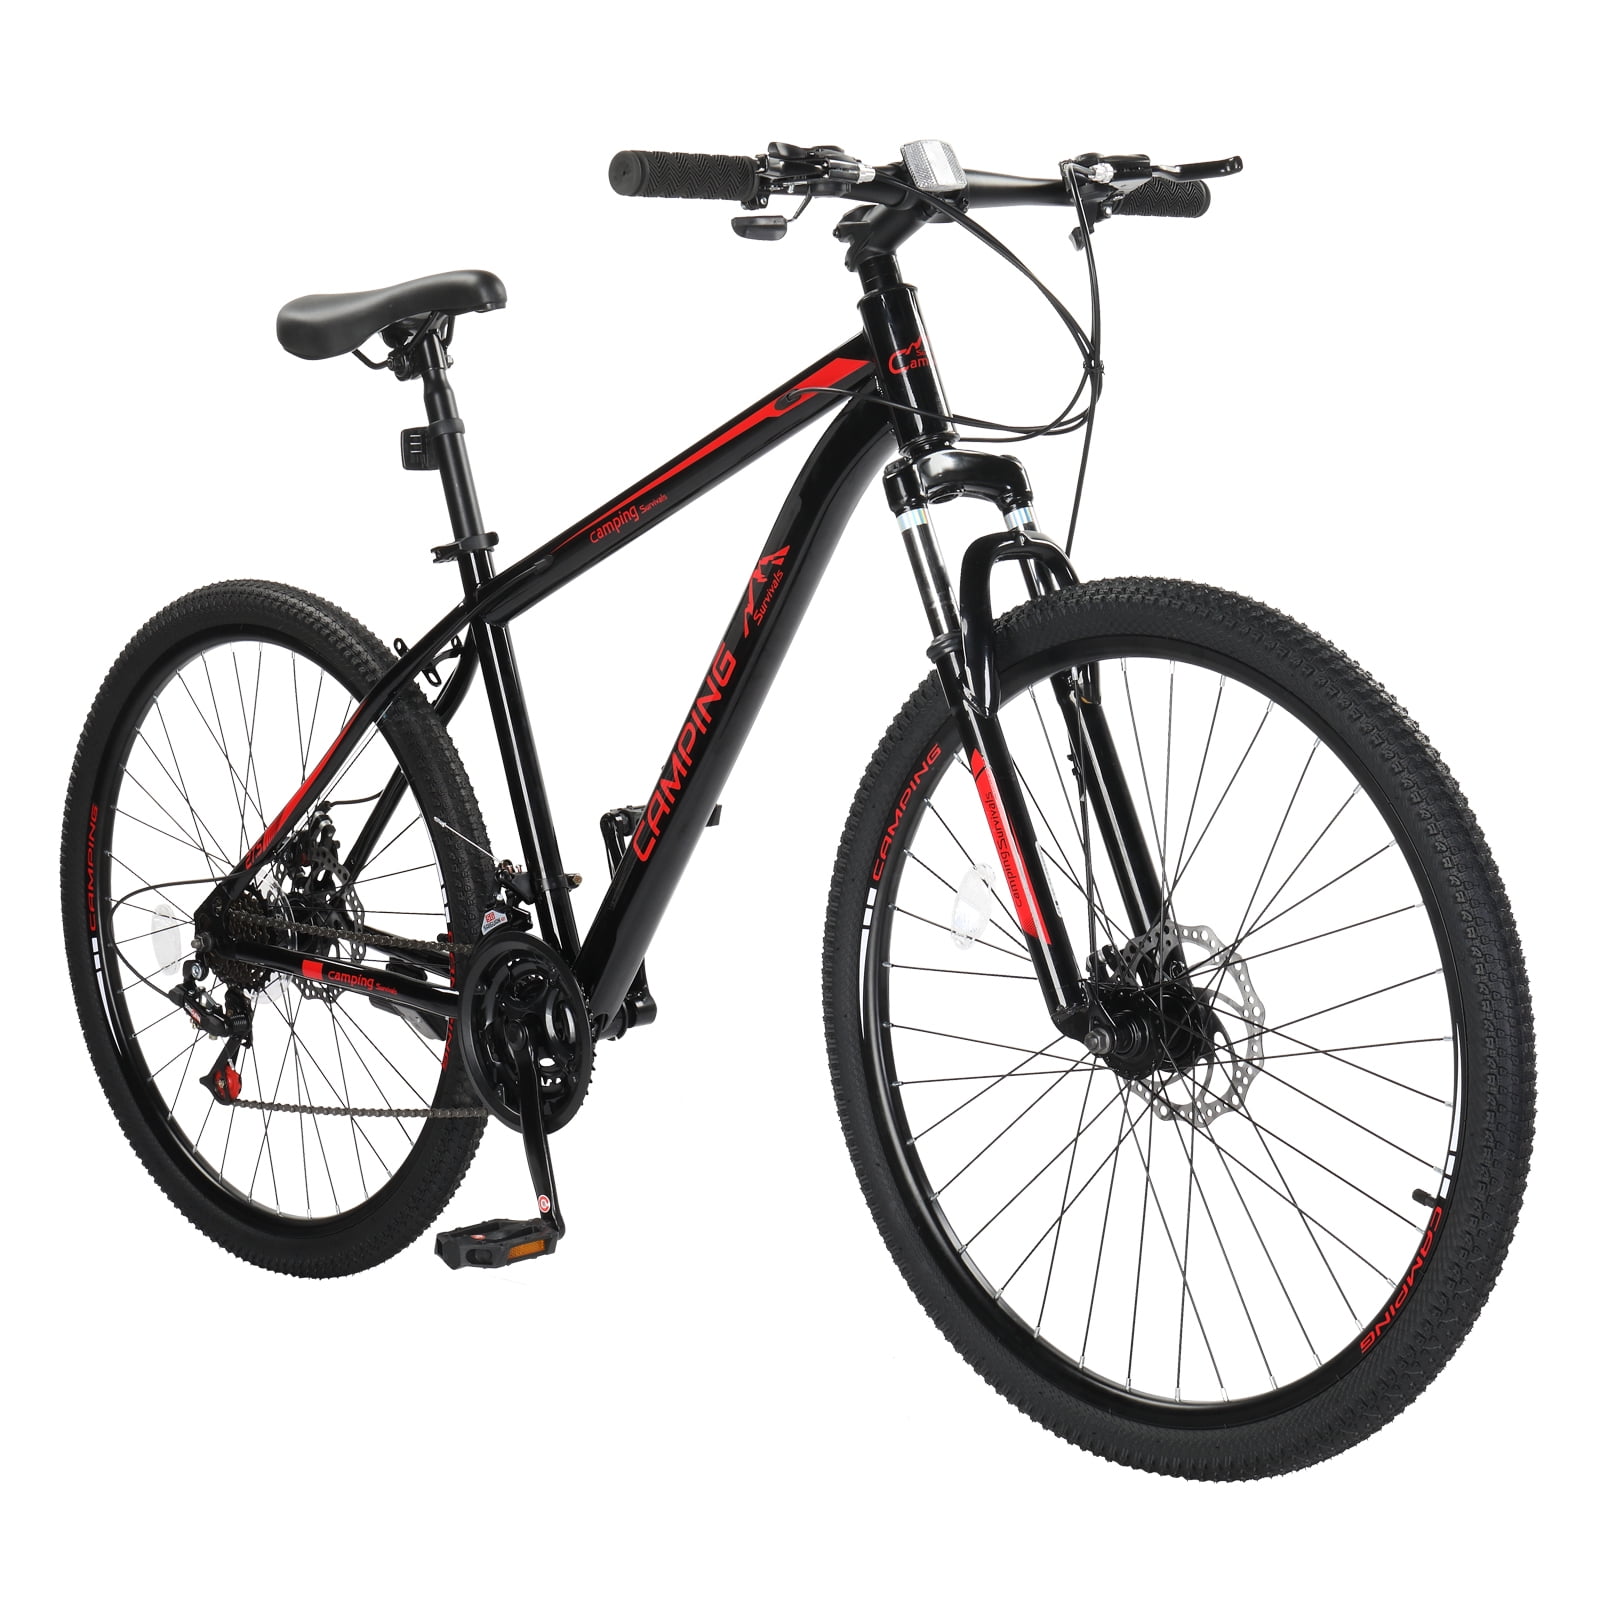 MTB-T001-R - Bicicleta Montaña Adulto Negro/naranja NEW SPEED - Guanxe  Atlantic Marketplace